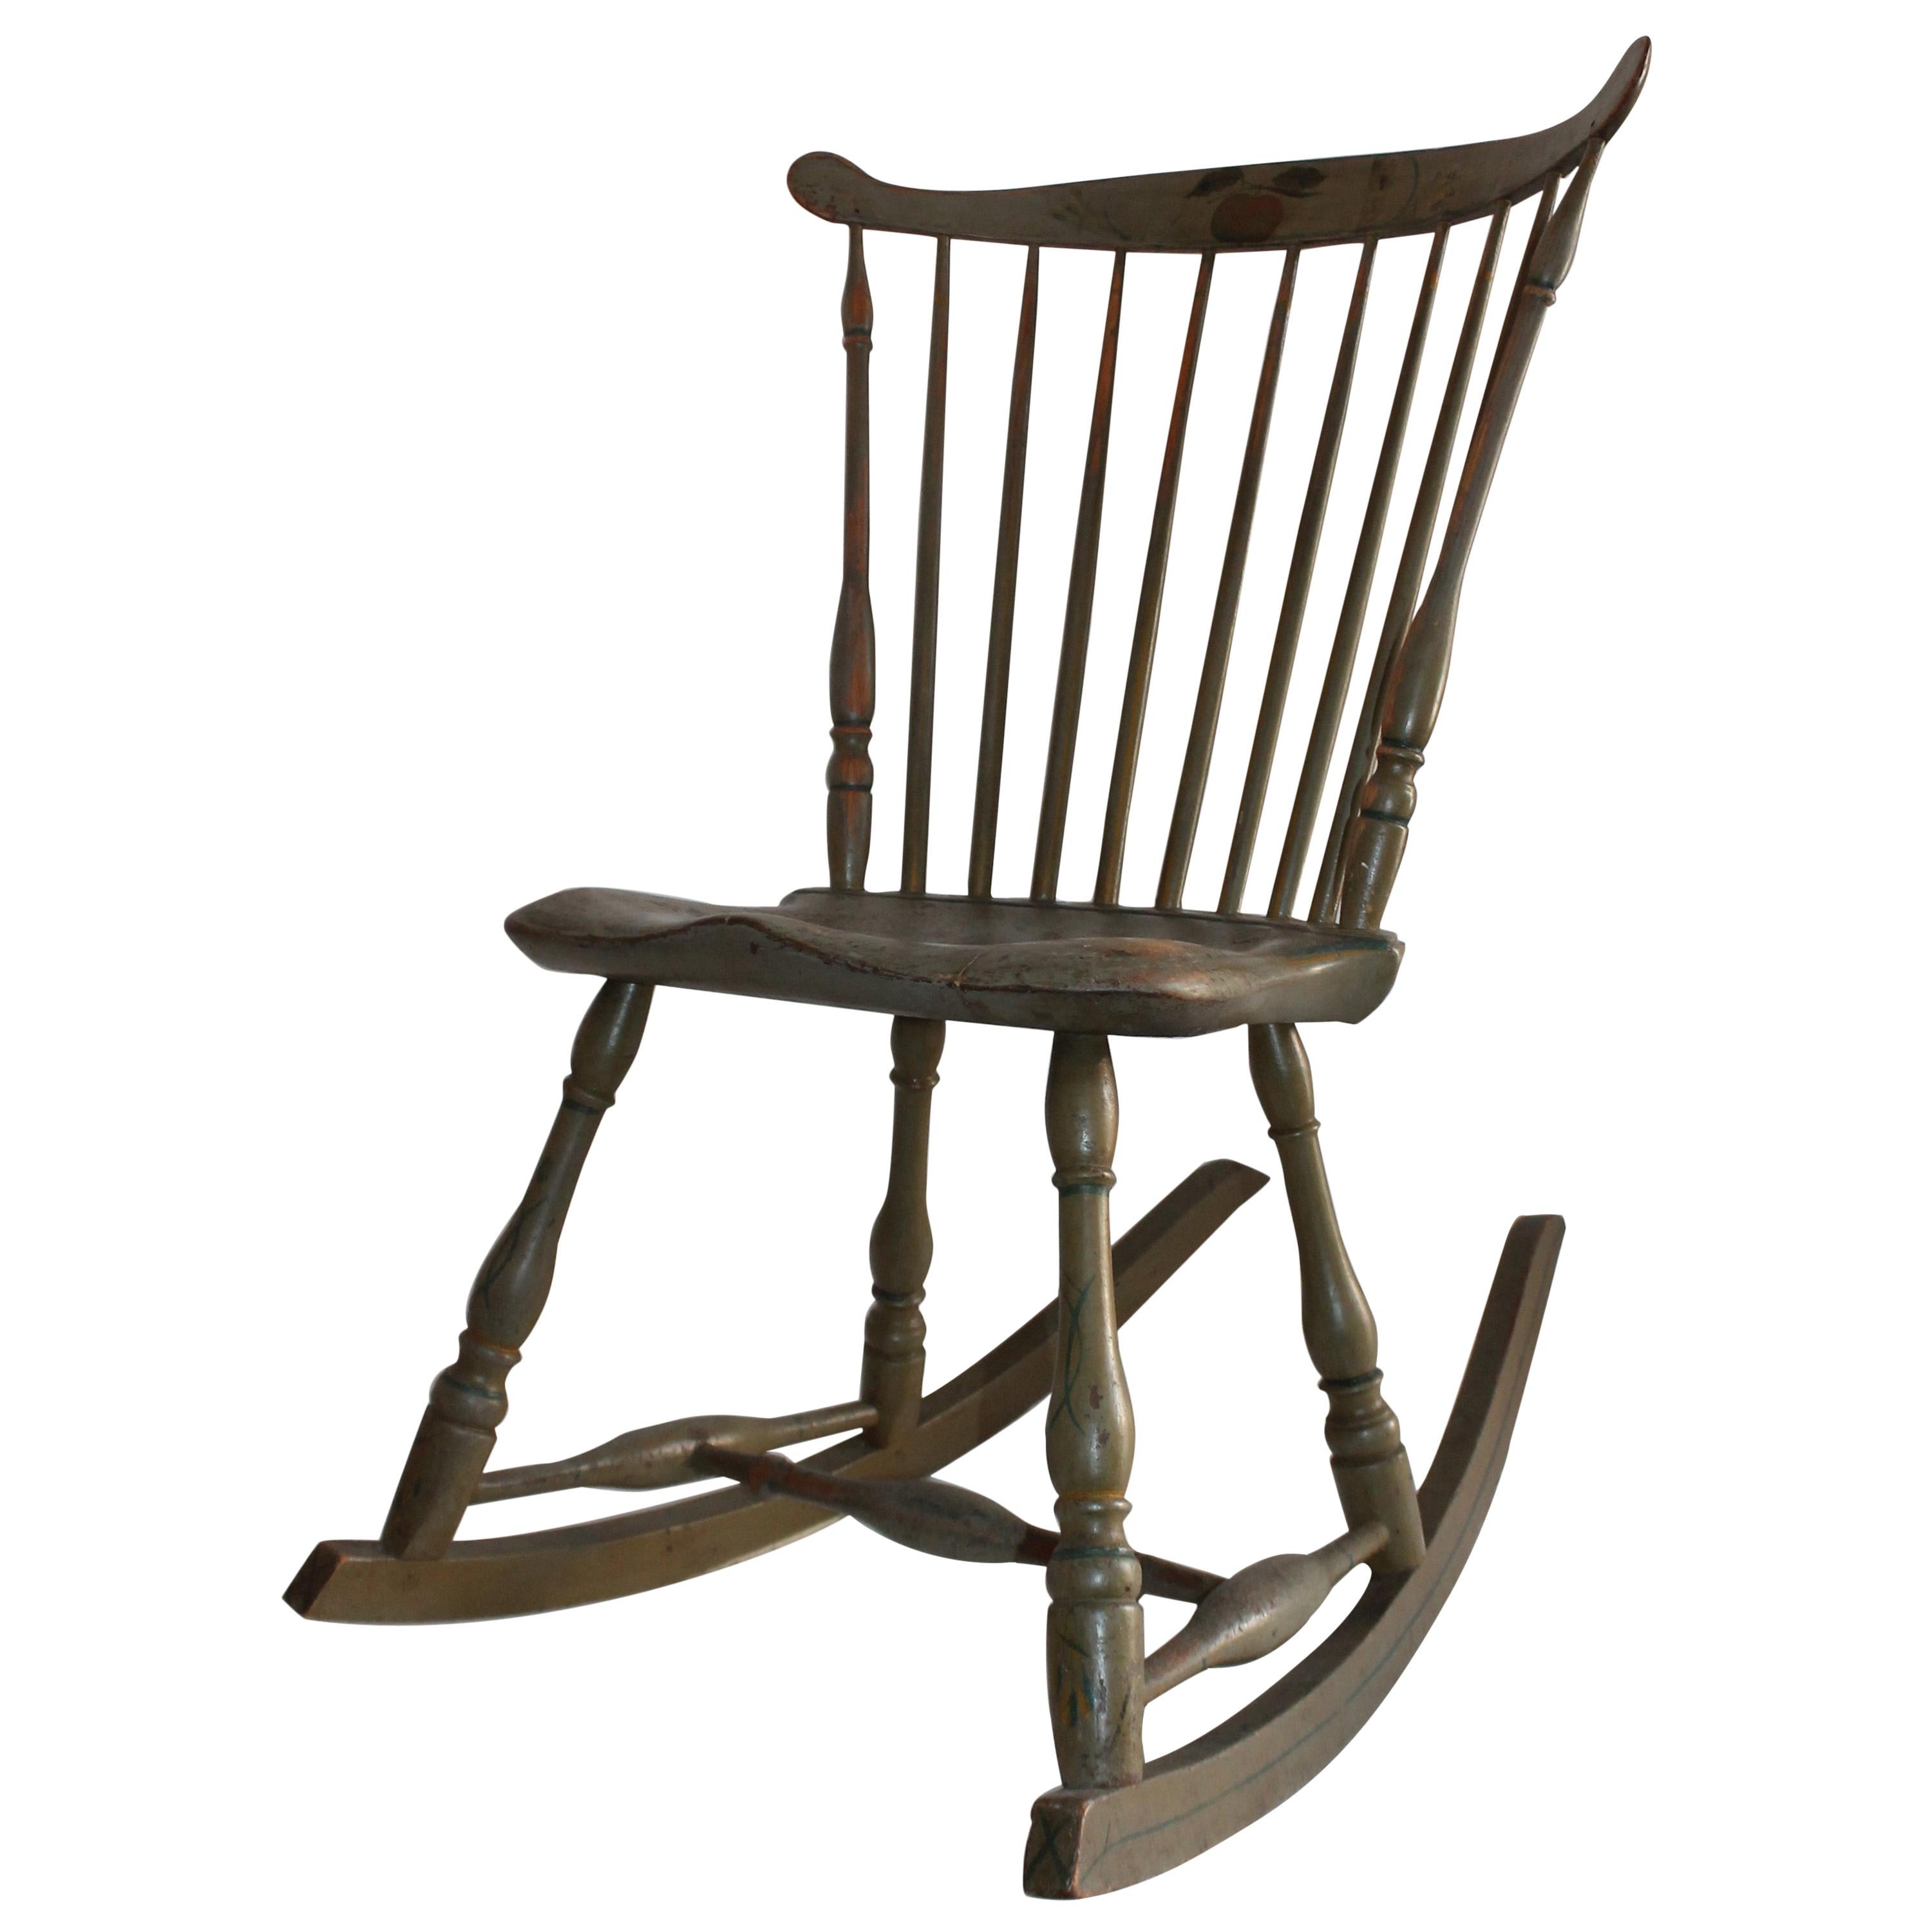 How do I identify a Windsor rocking chair?